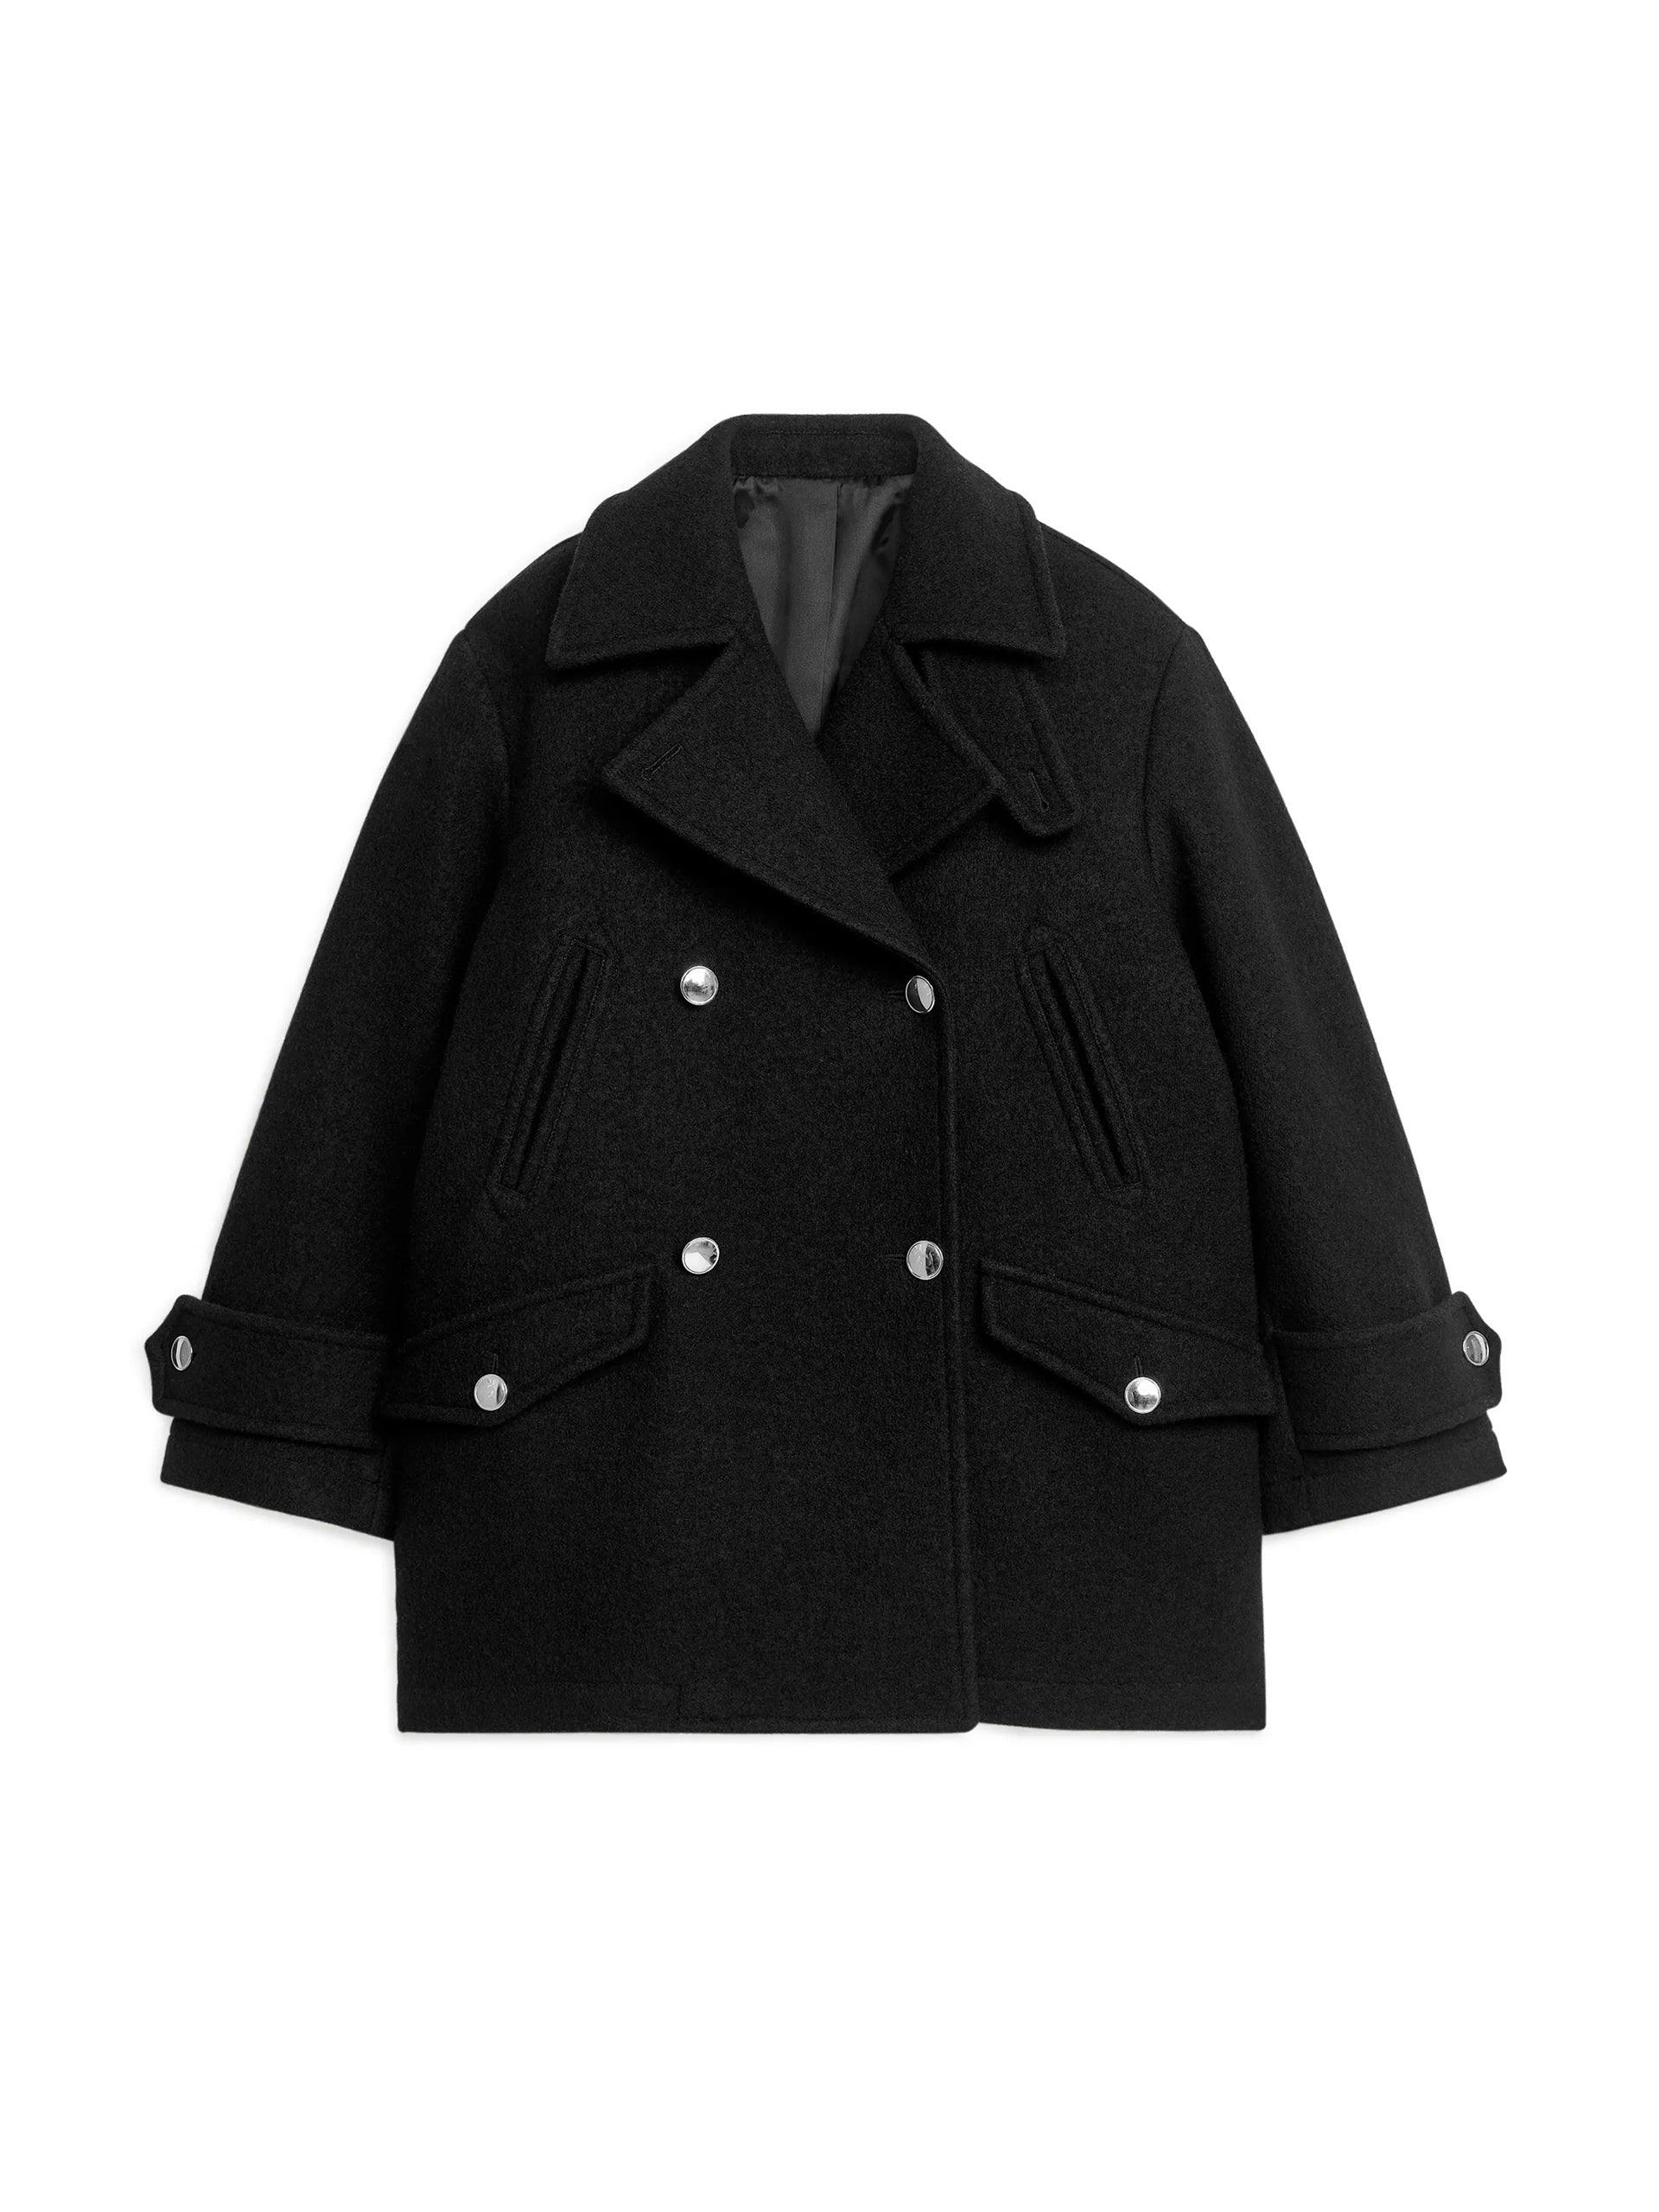 Black double-breasted pea coat